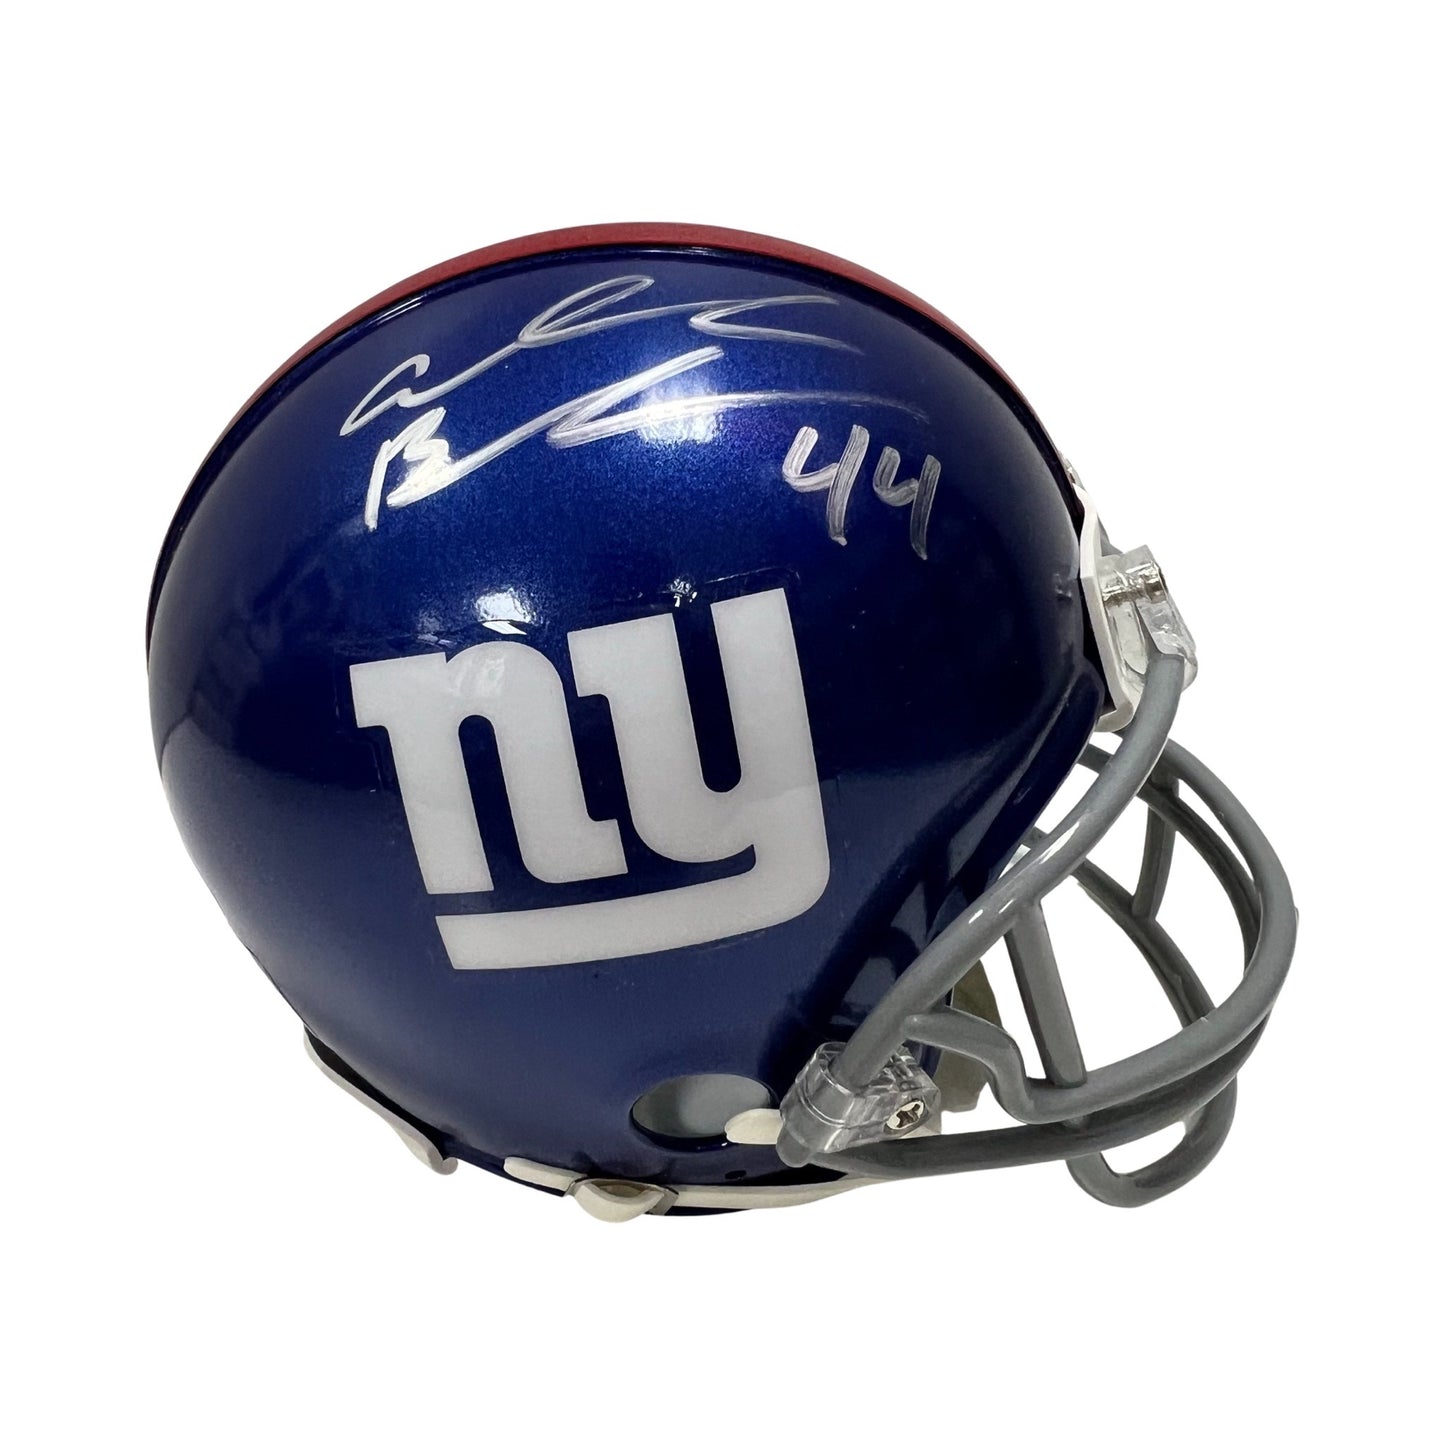 Ahmad Bradshaw Autographed New York Giants Mini Helmet BG